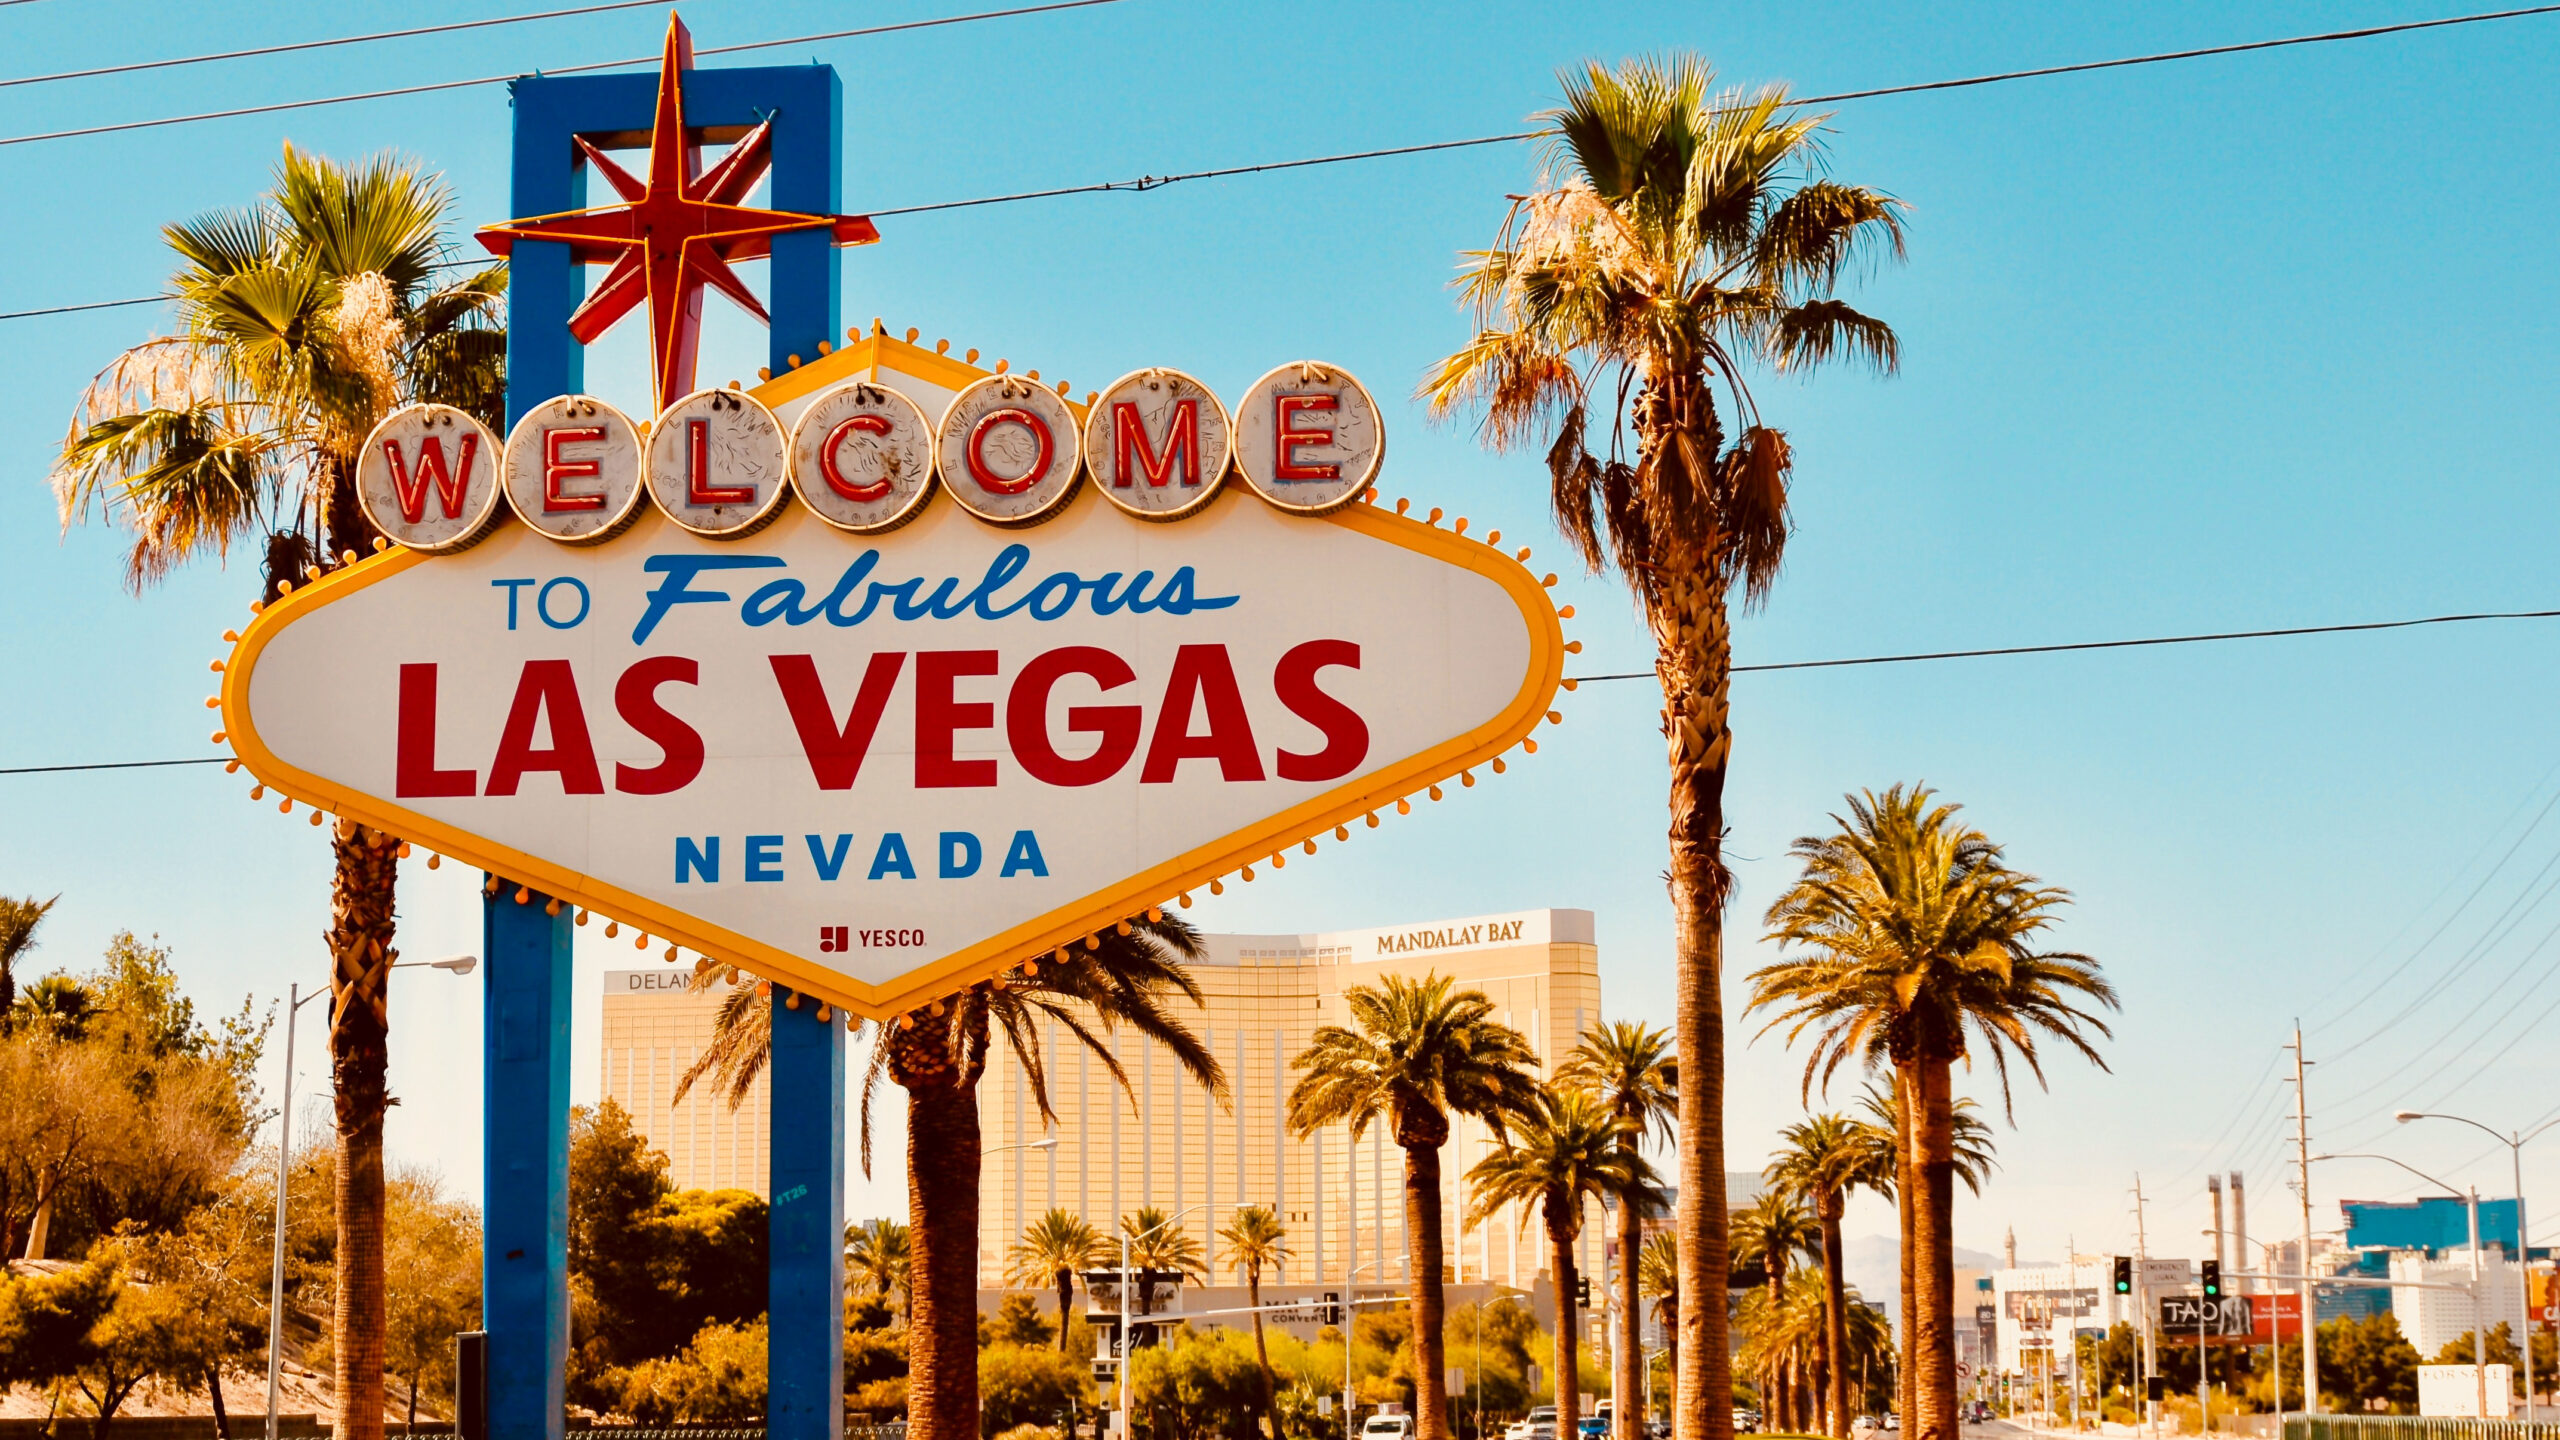 La Vegas sign